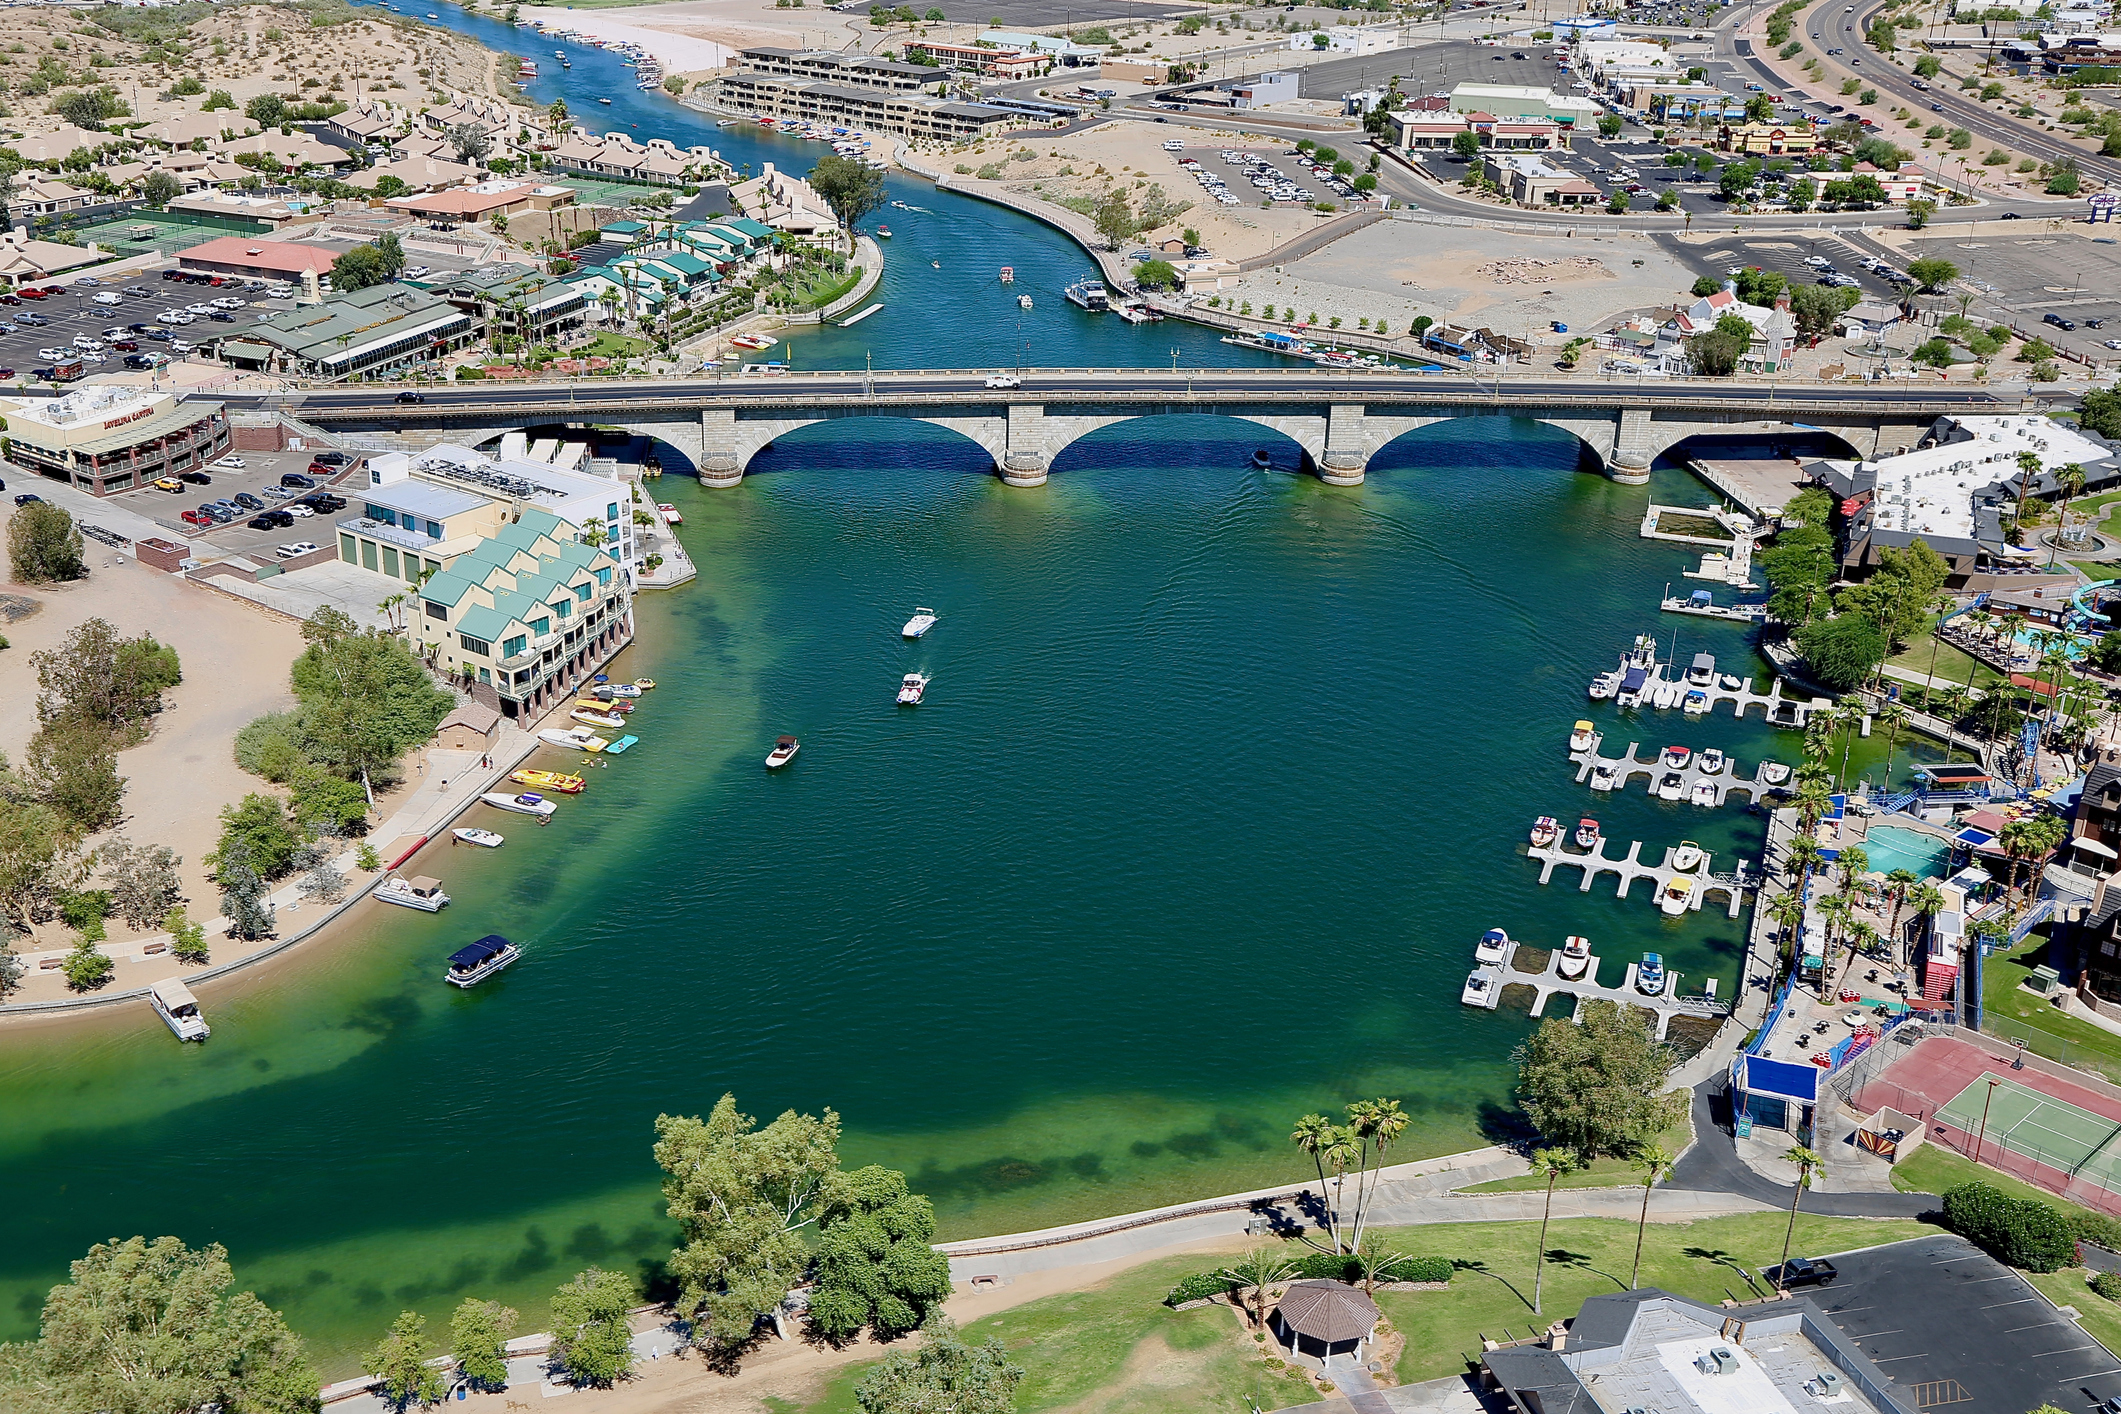 A bridge crosses a thin body of water aerial shot.